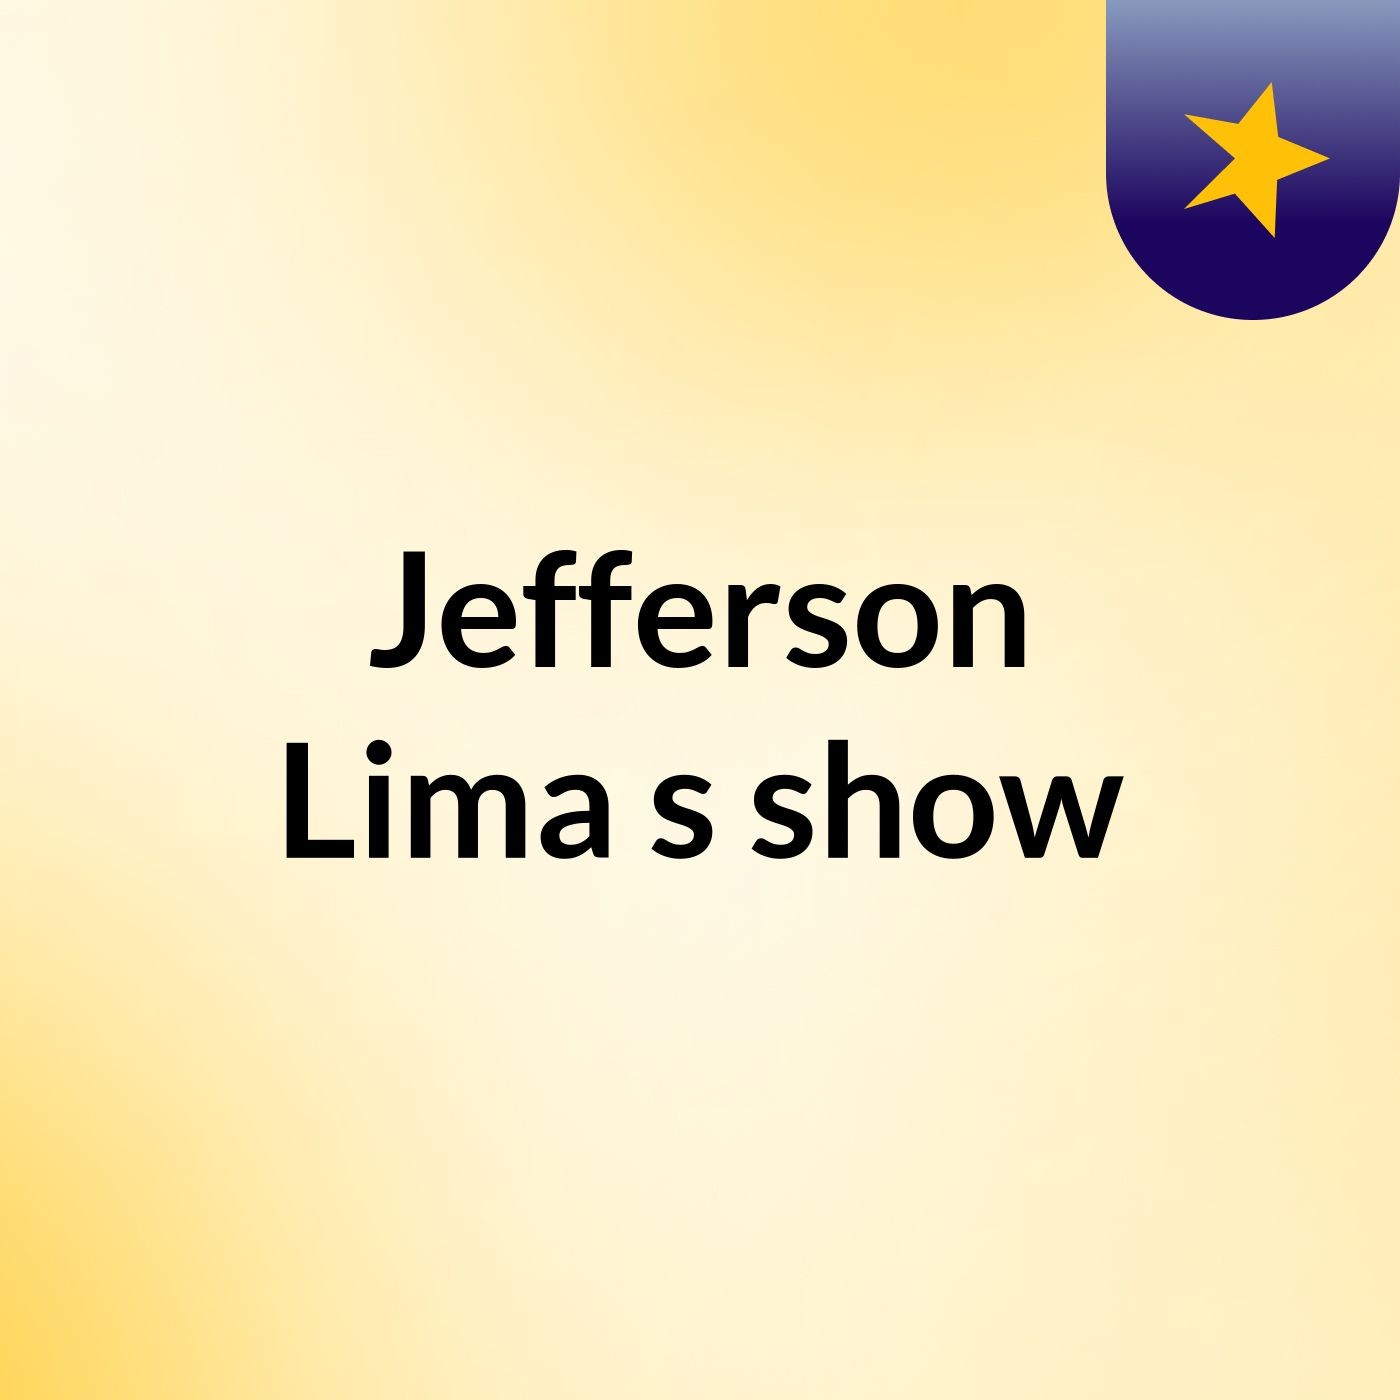 Jefferson Lima's show